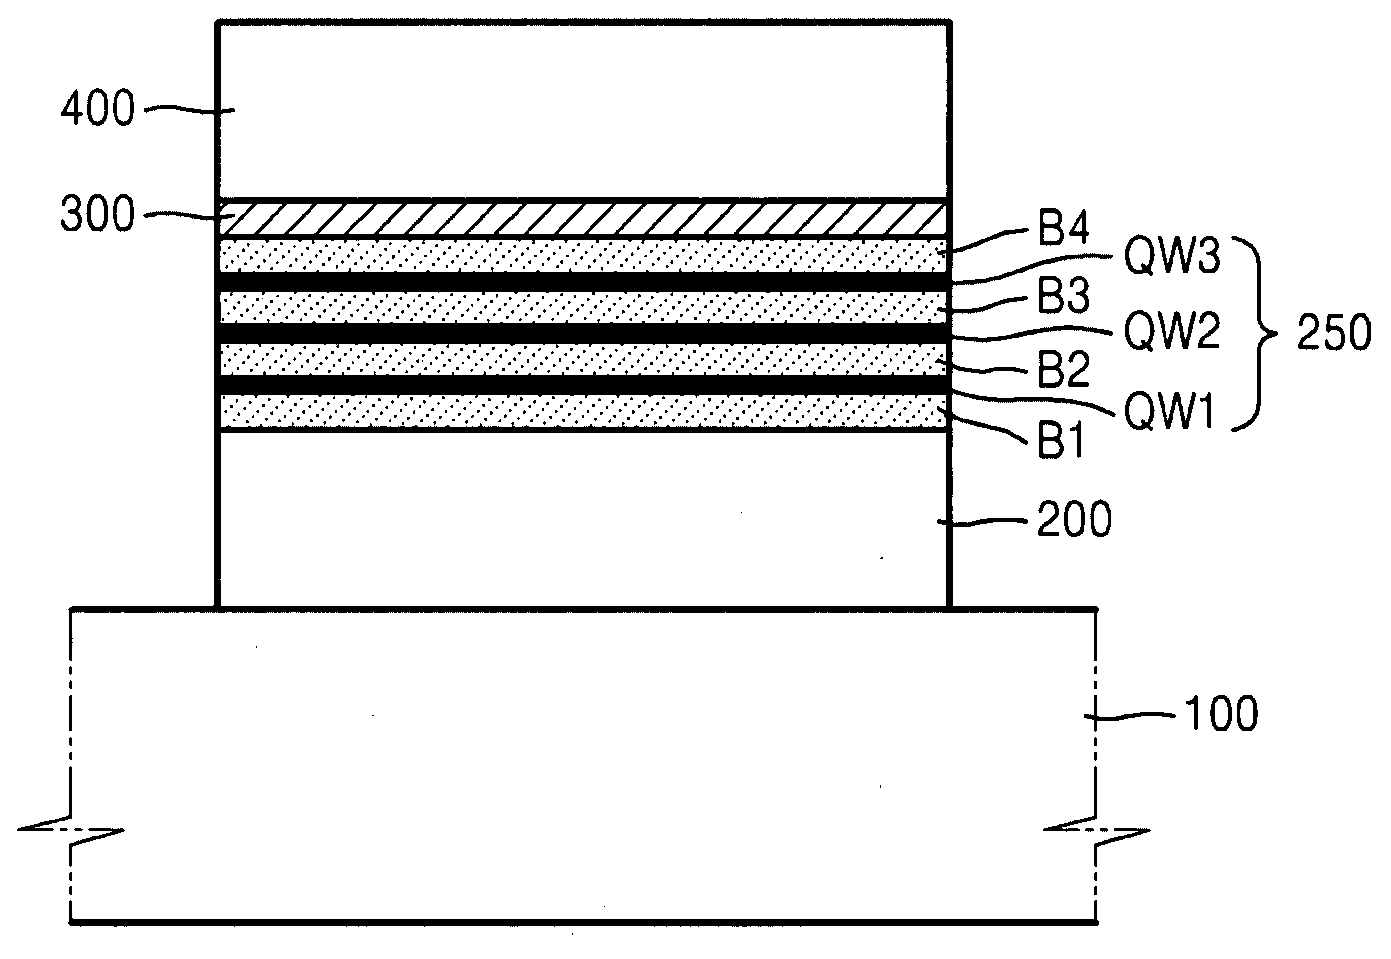 Semiconductor light emitting device